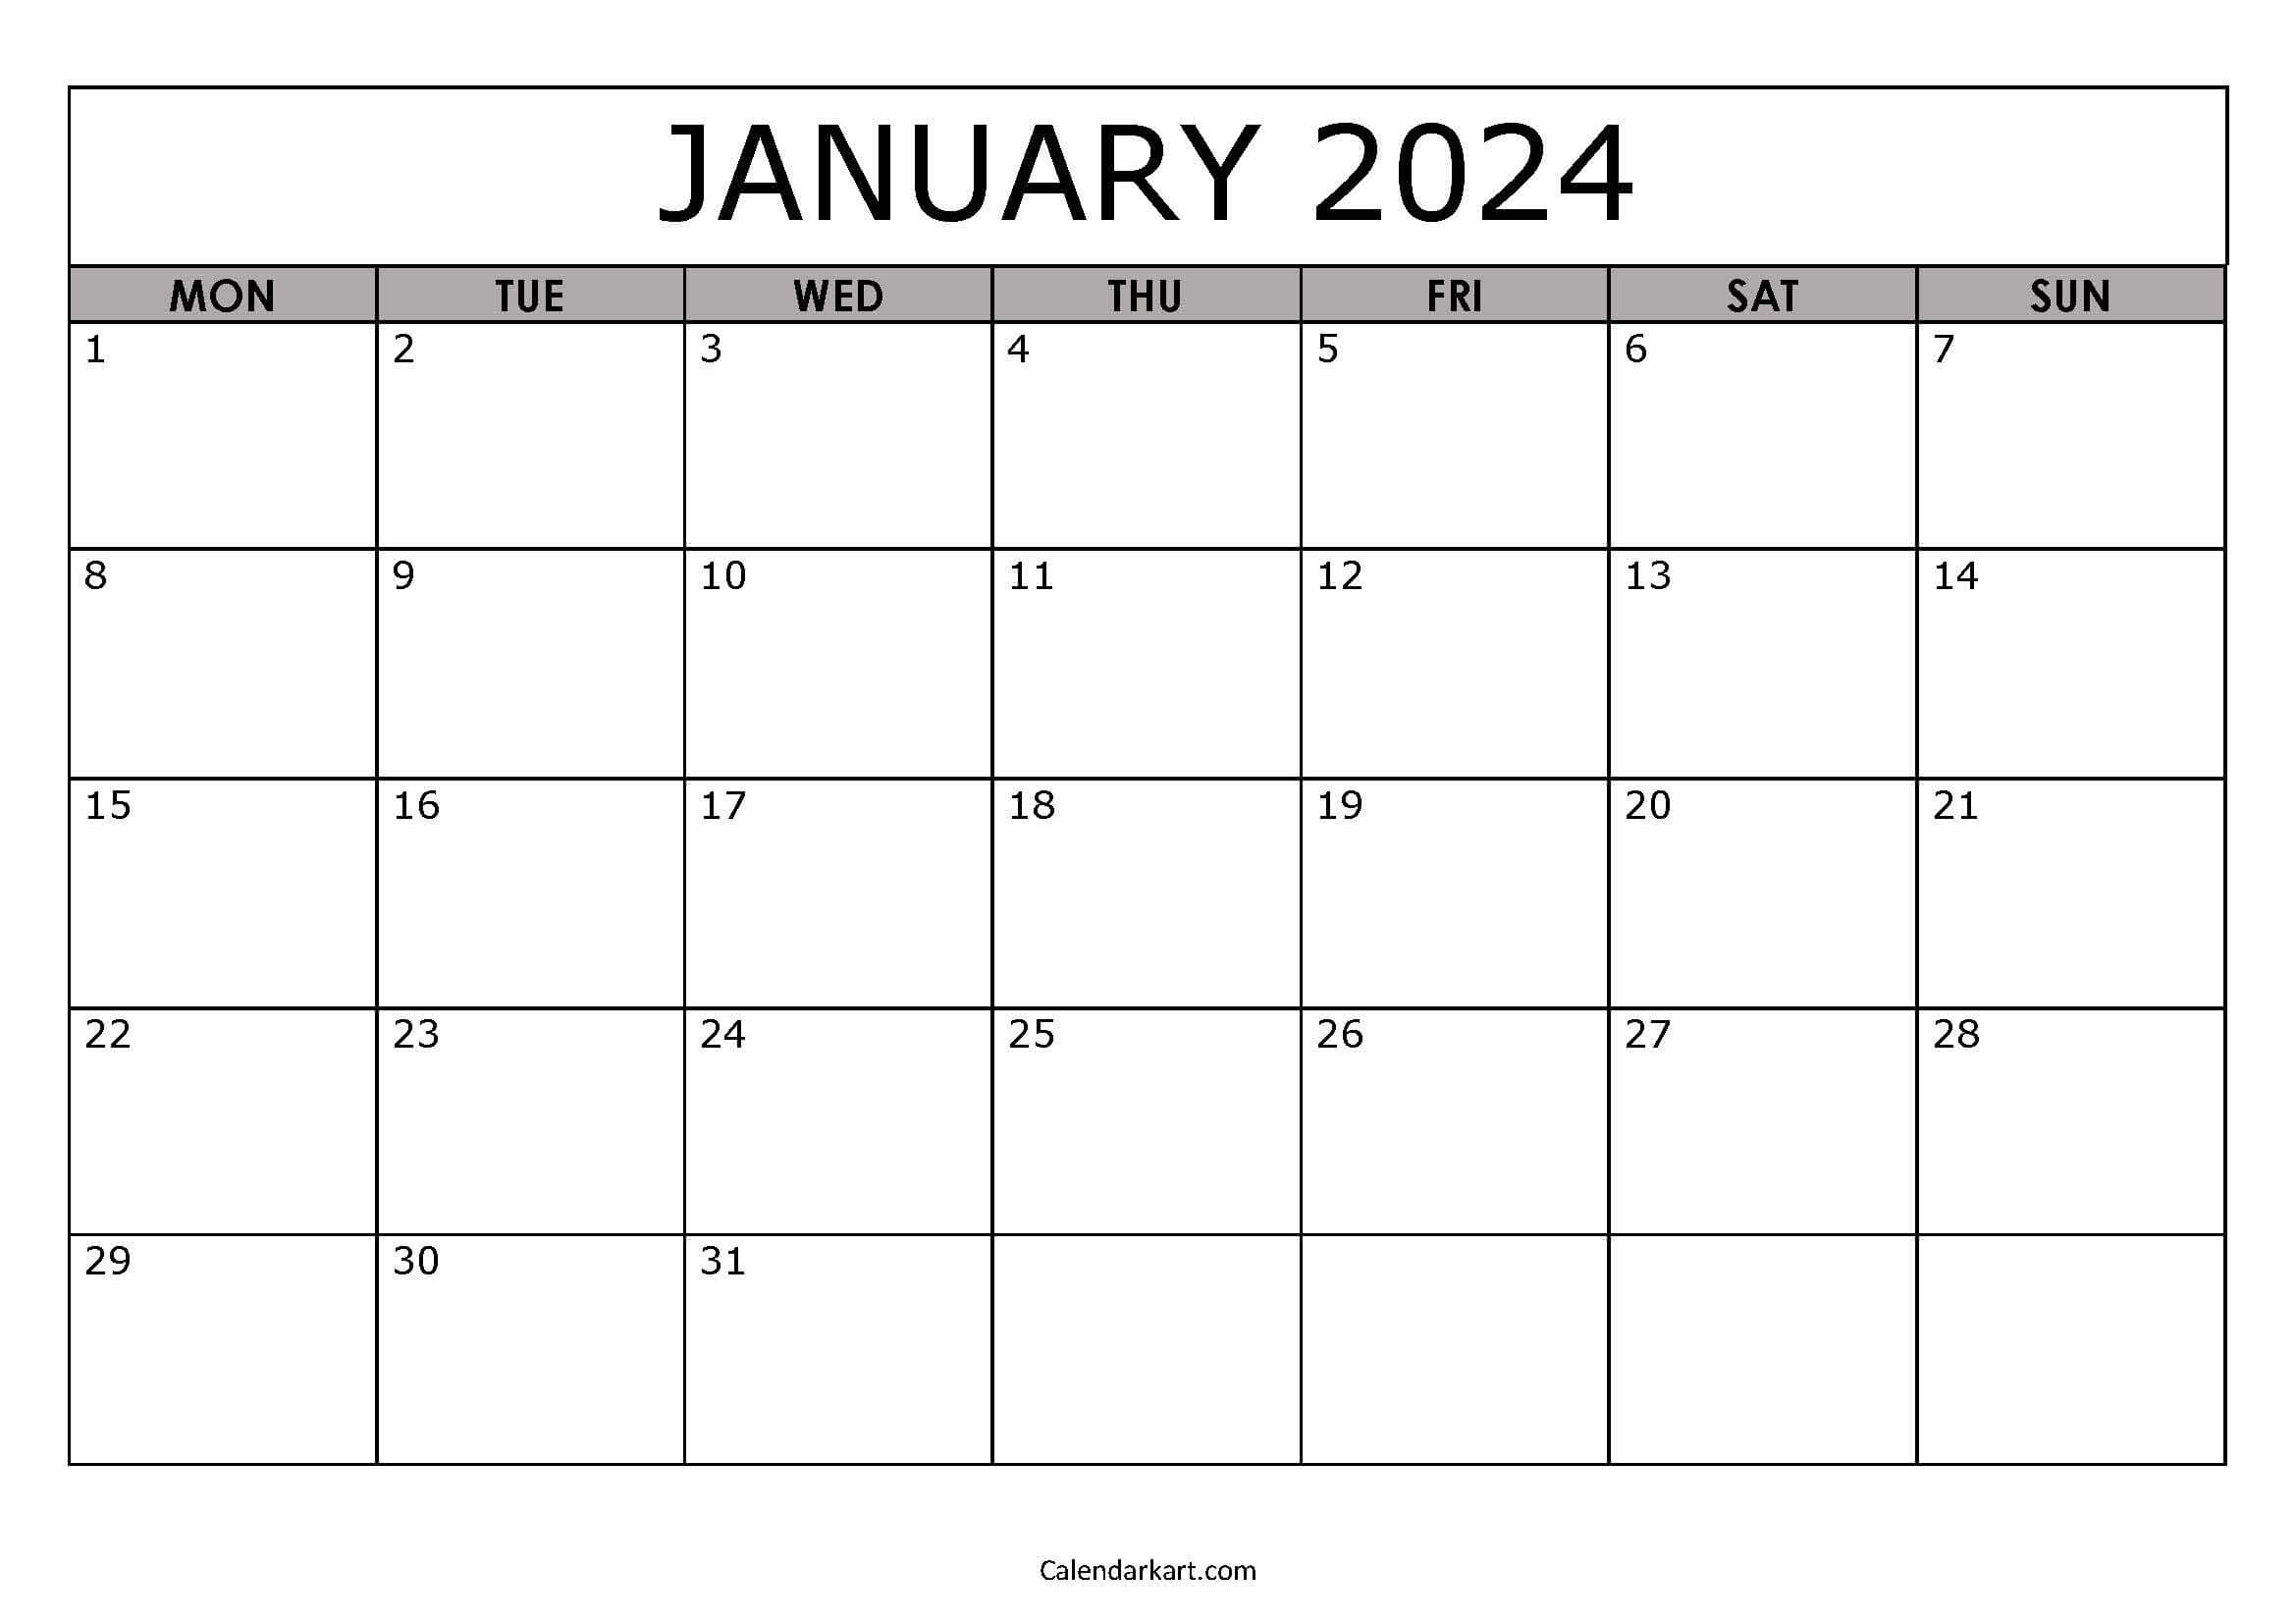 Free Printable January 2024 Calendars - Calendarkart inside Free Printable April 2024 Calendar Large Boxes